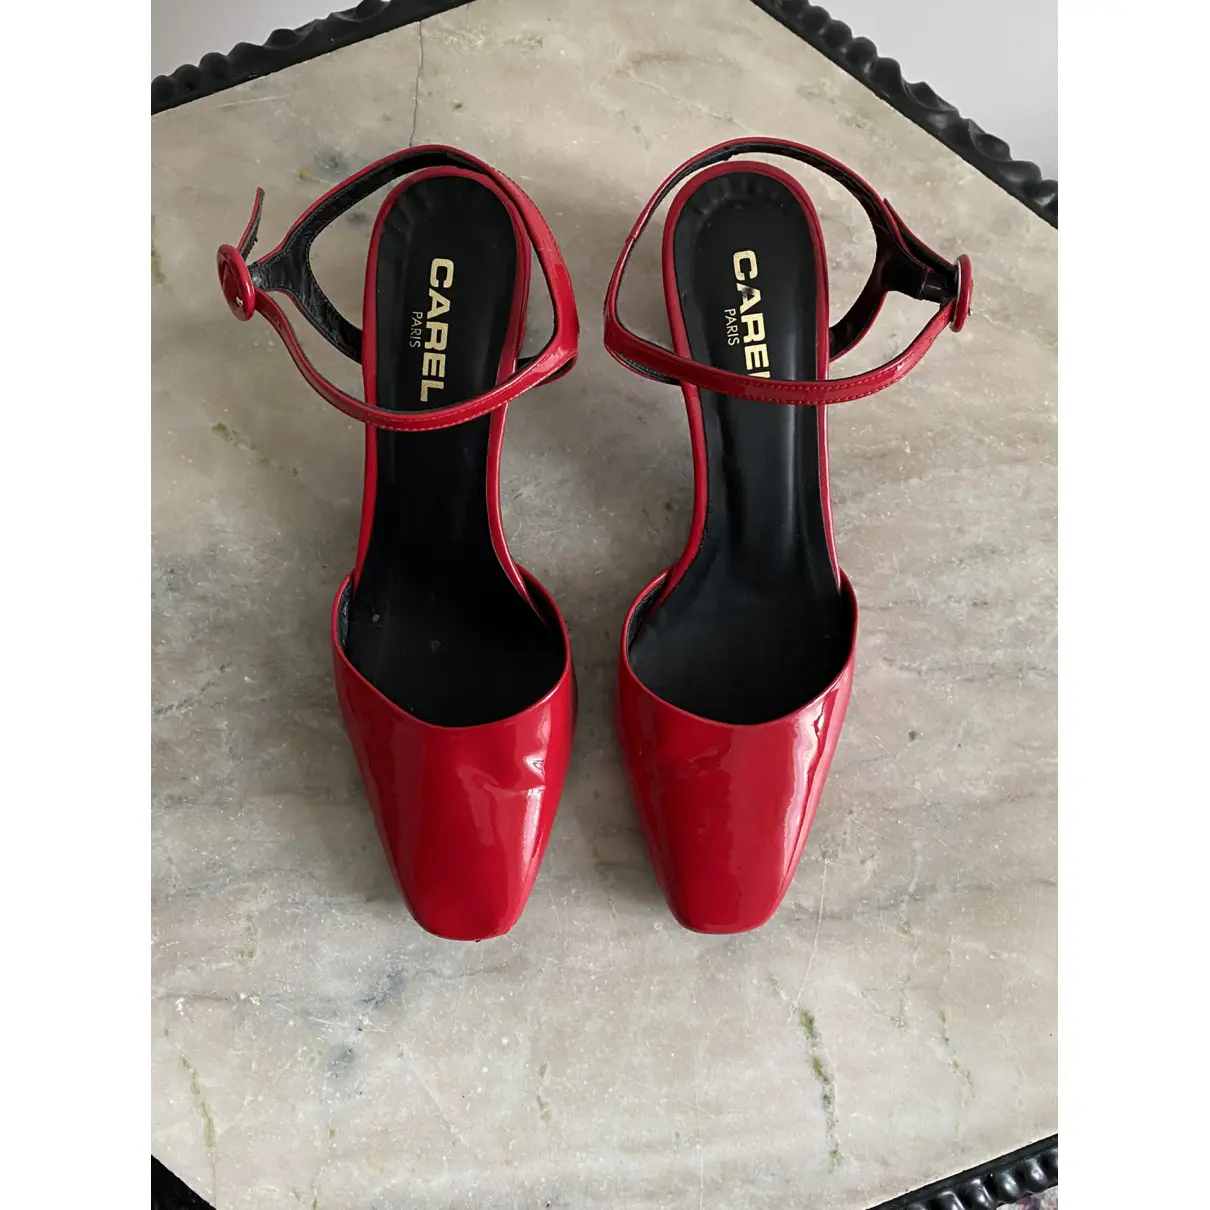 Buy Carel Patent leather heels online